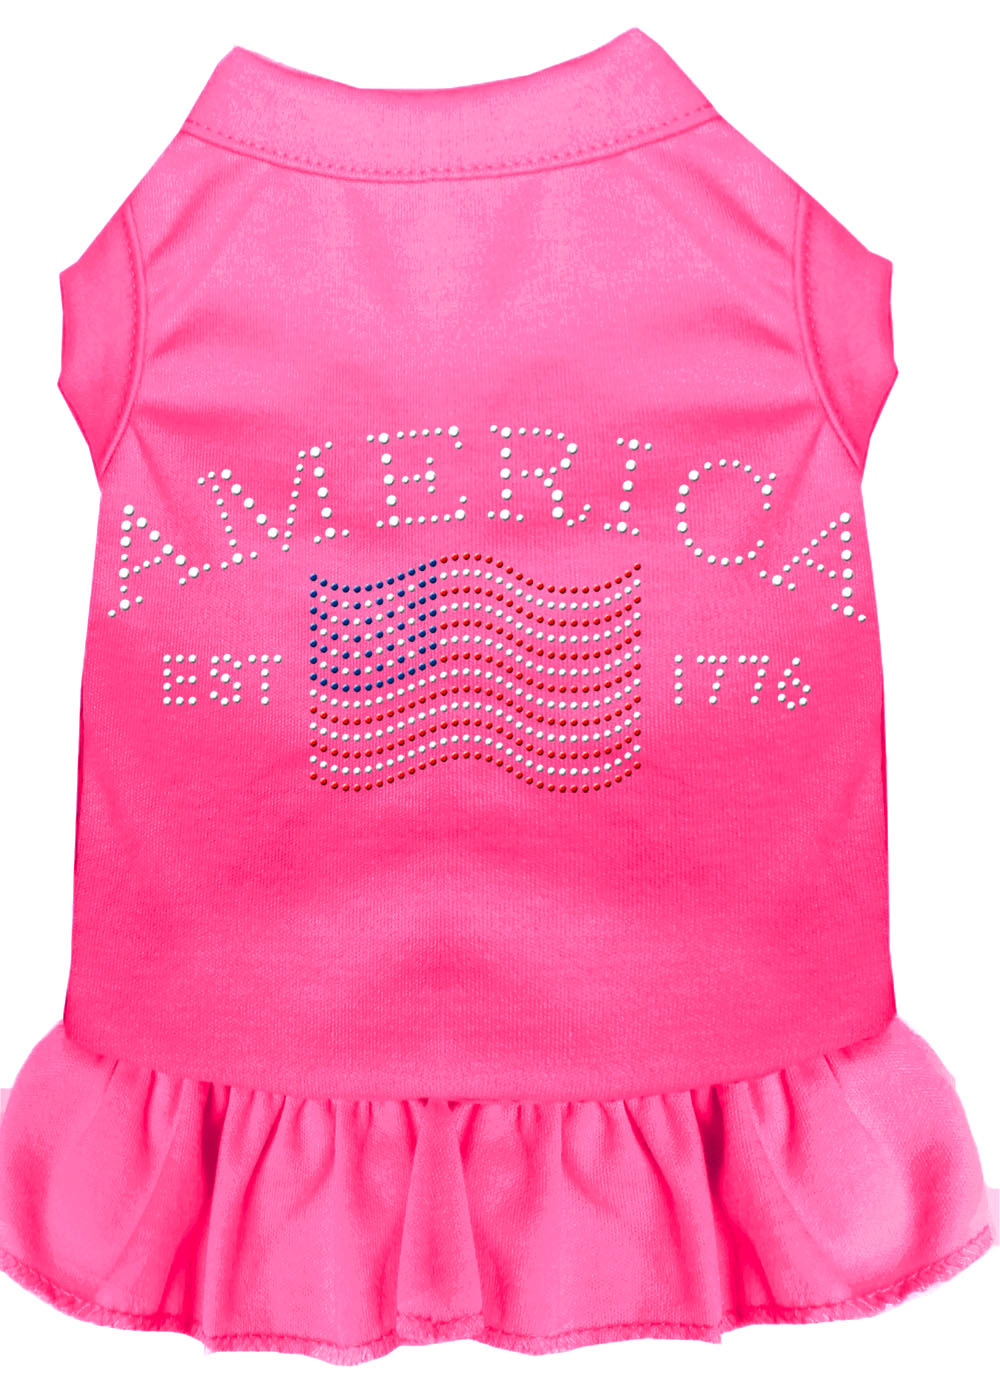 Classic America Rhinestone Dress Bright Pink 4X